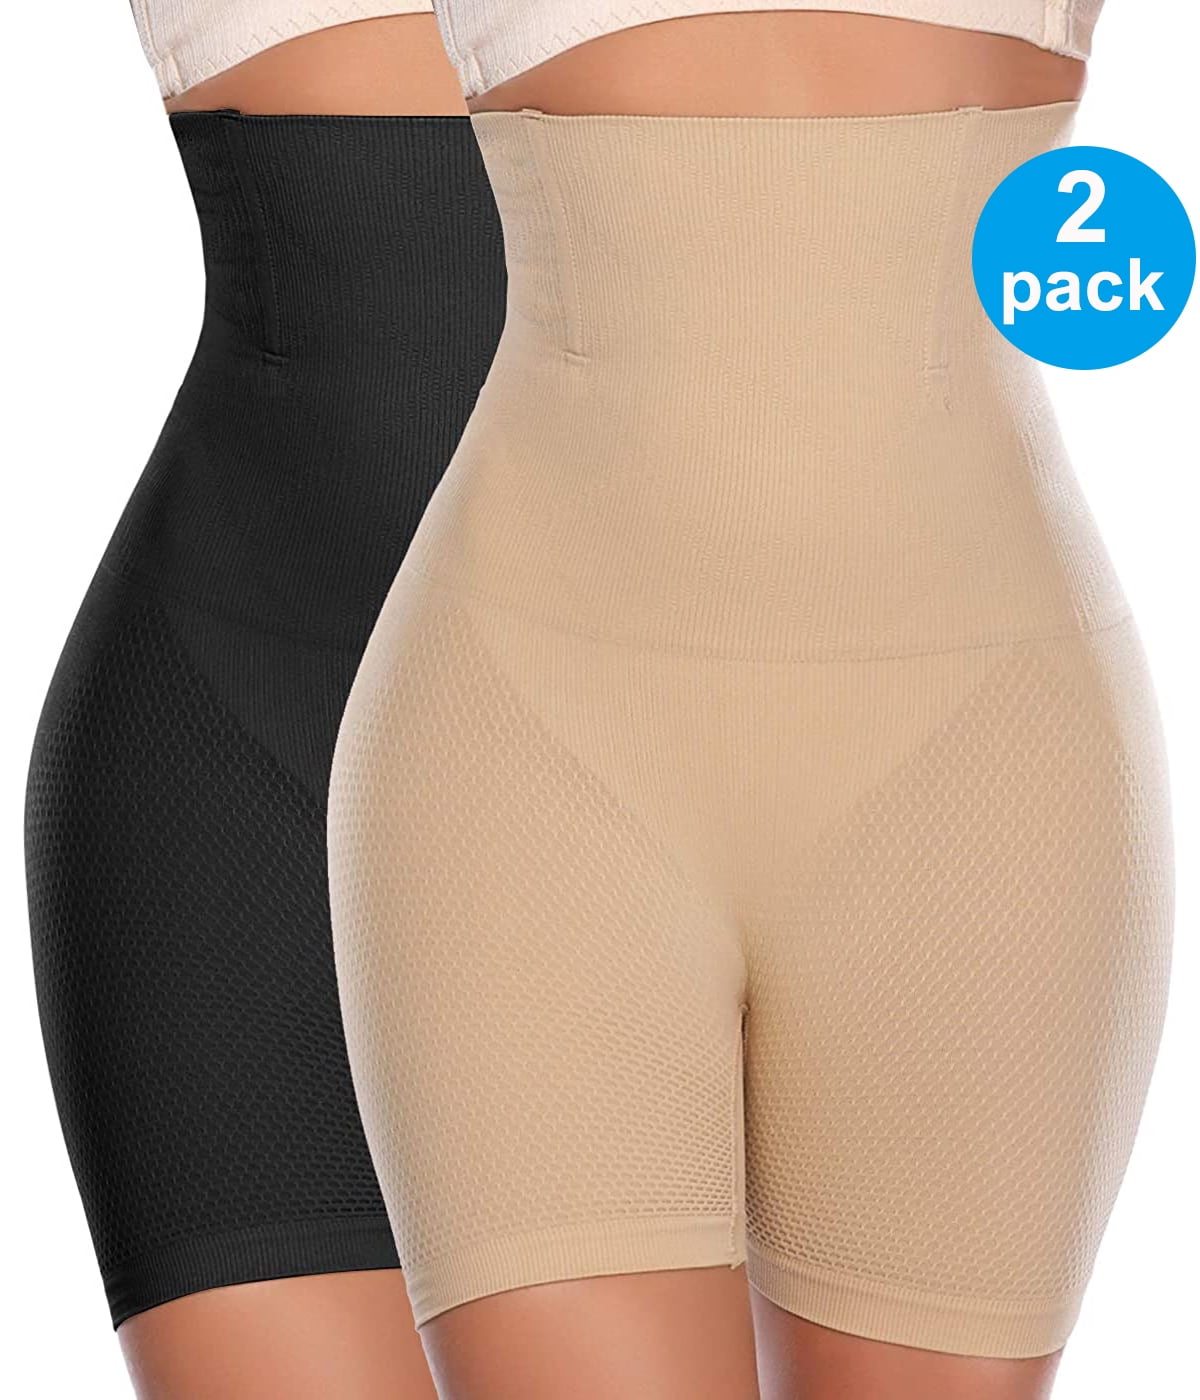 VASLANDA Shapewear Bodysuit for Women Tummy Control Butt Lifter Panty Criss  Cross Stomach Body Shaper Trainer Slimming Girdles 